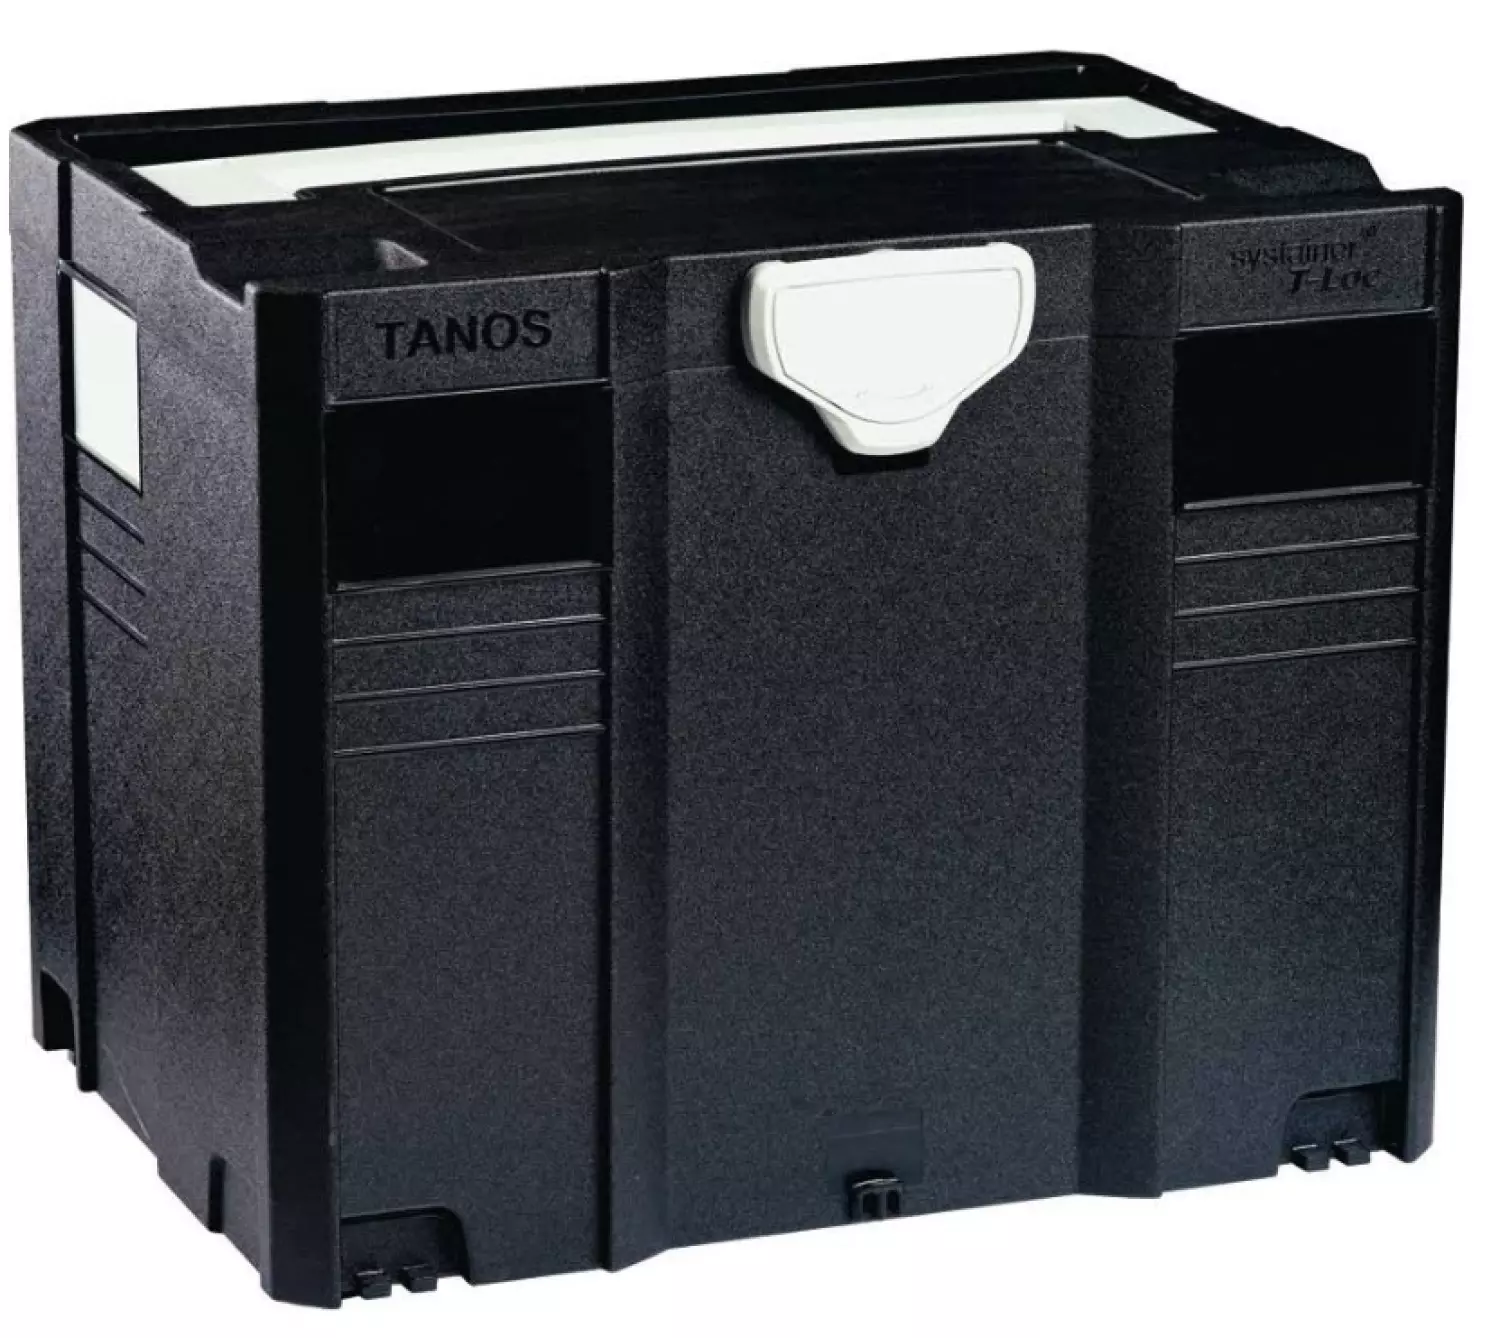 Panasonic TOOLBOX4-IN systainer avec insert pour EY4550,EY45A2 ,EY46A2 , EY46A5 et pour combi-sets